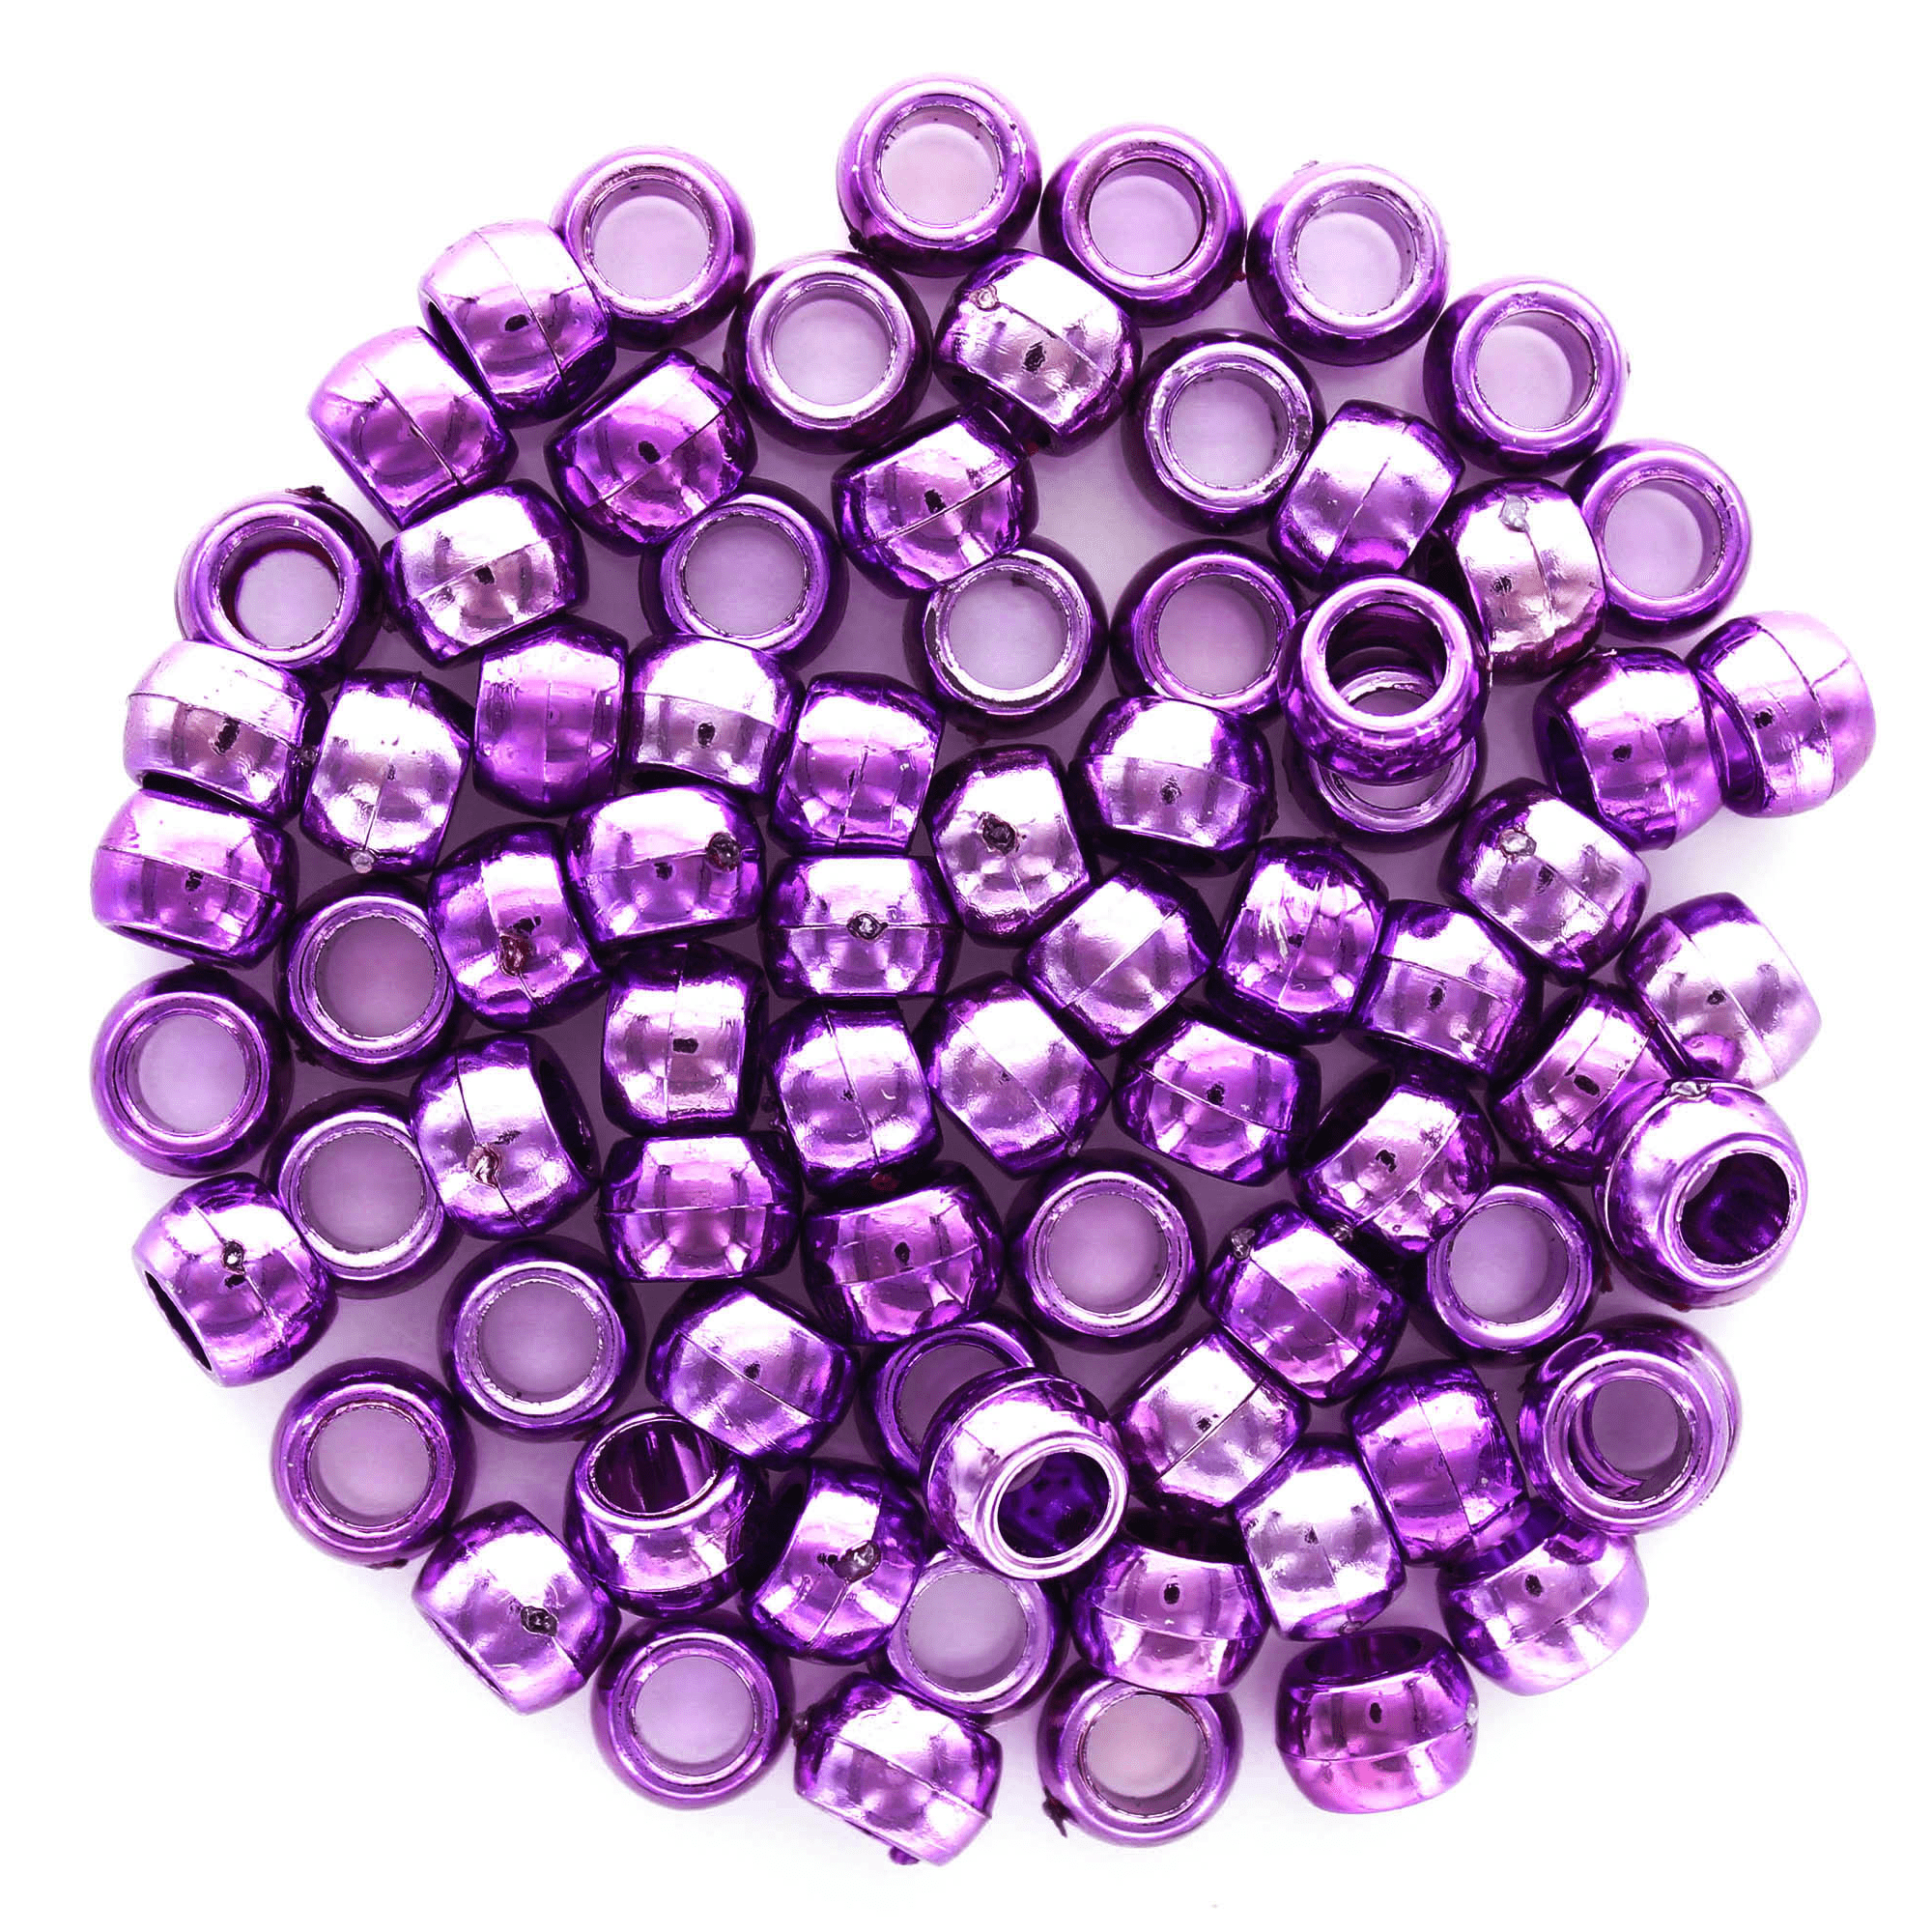 Essentials by Leisure Arts Pony Bead 6mm x 9mm Metallic Purple Opaque Plastic Pony Beads Bulk 500 Pieces for Arts, Crafts, Bracelet, Necklace, Jewelry